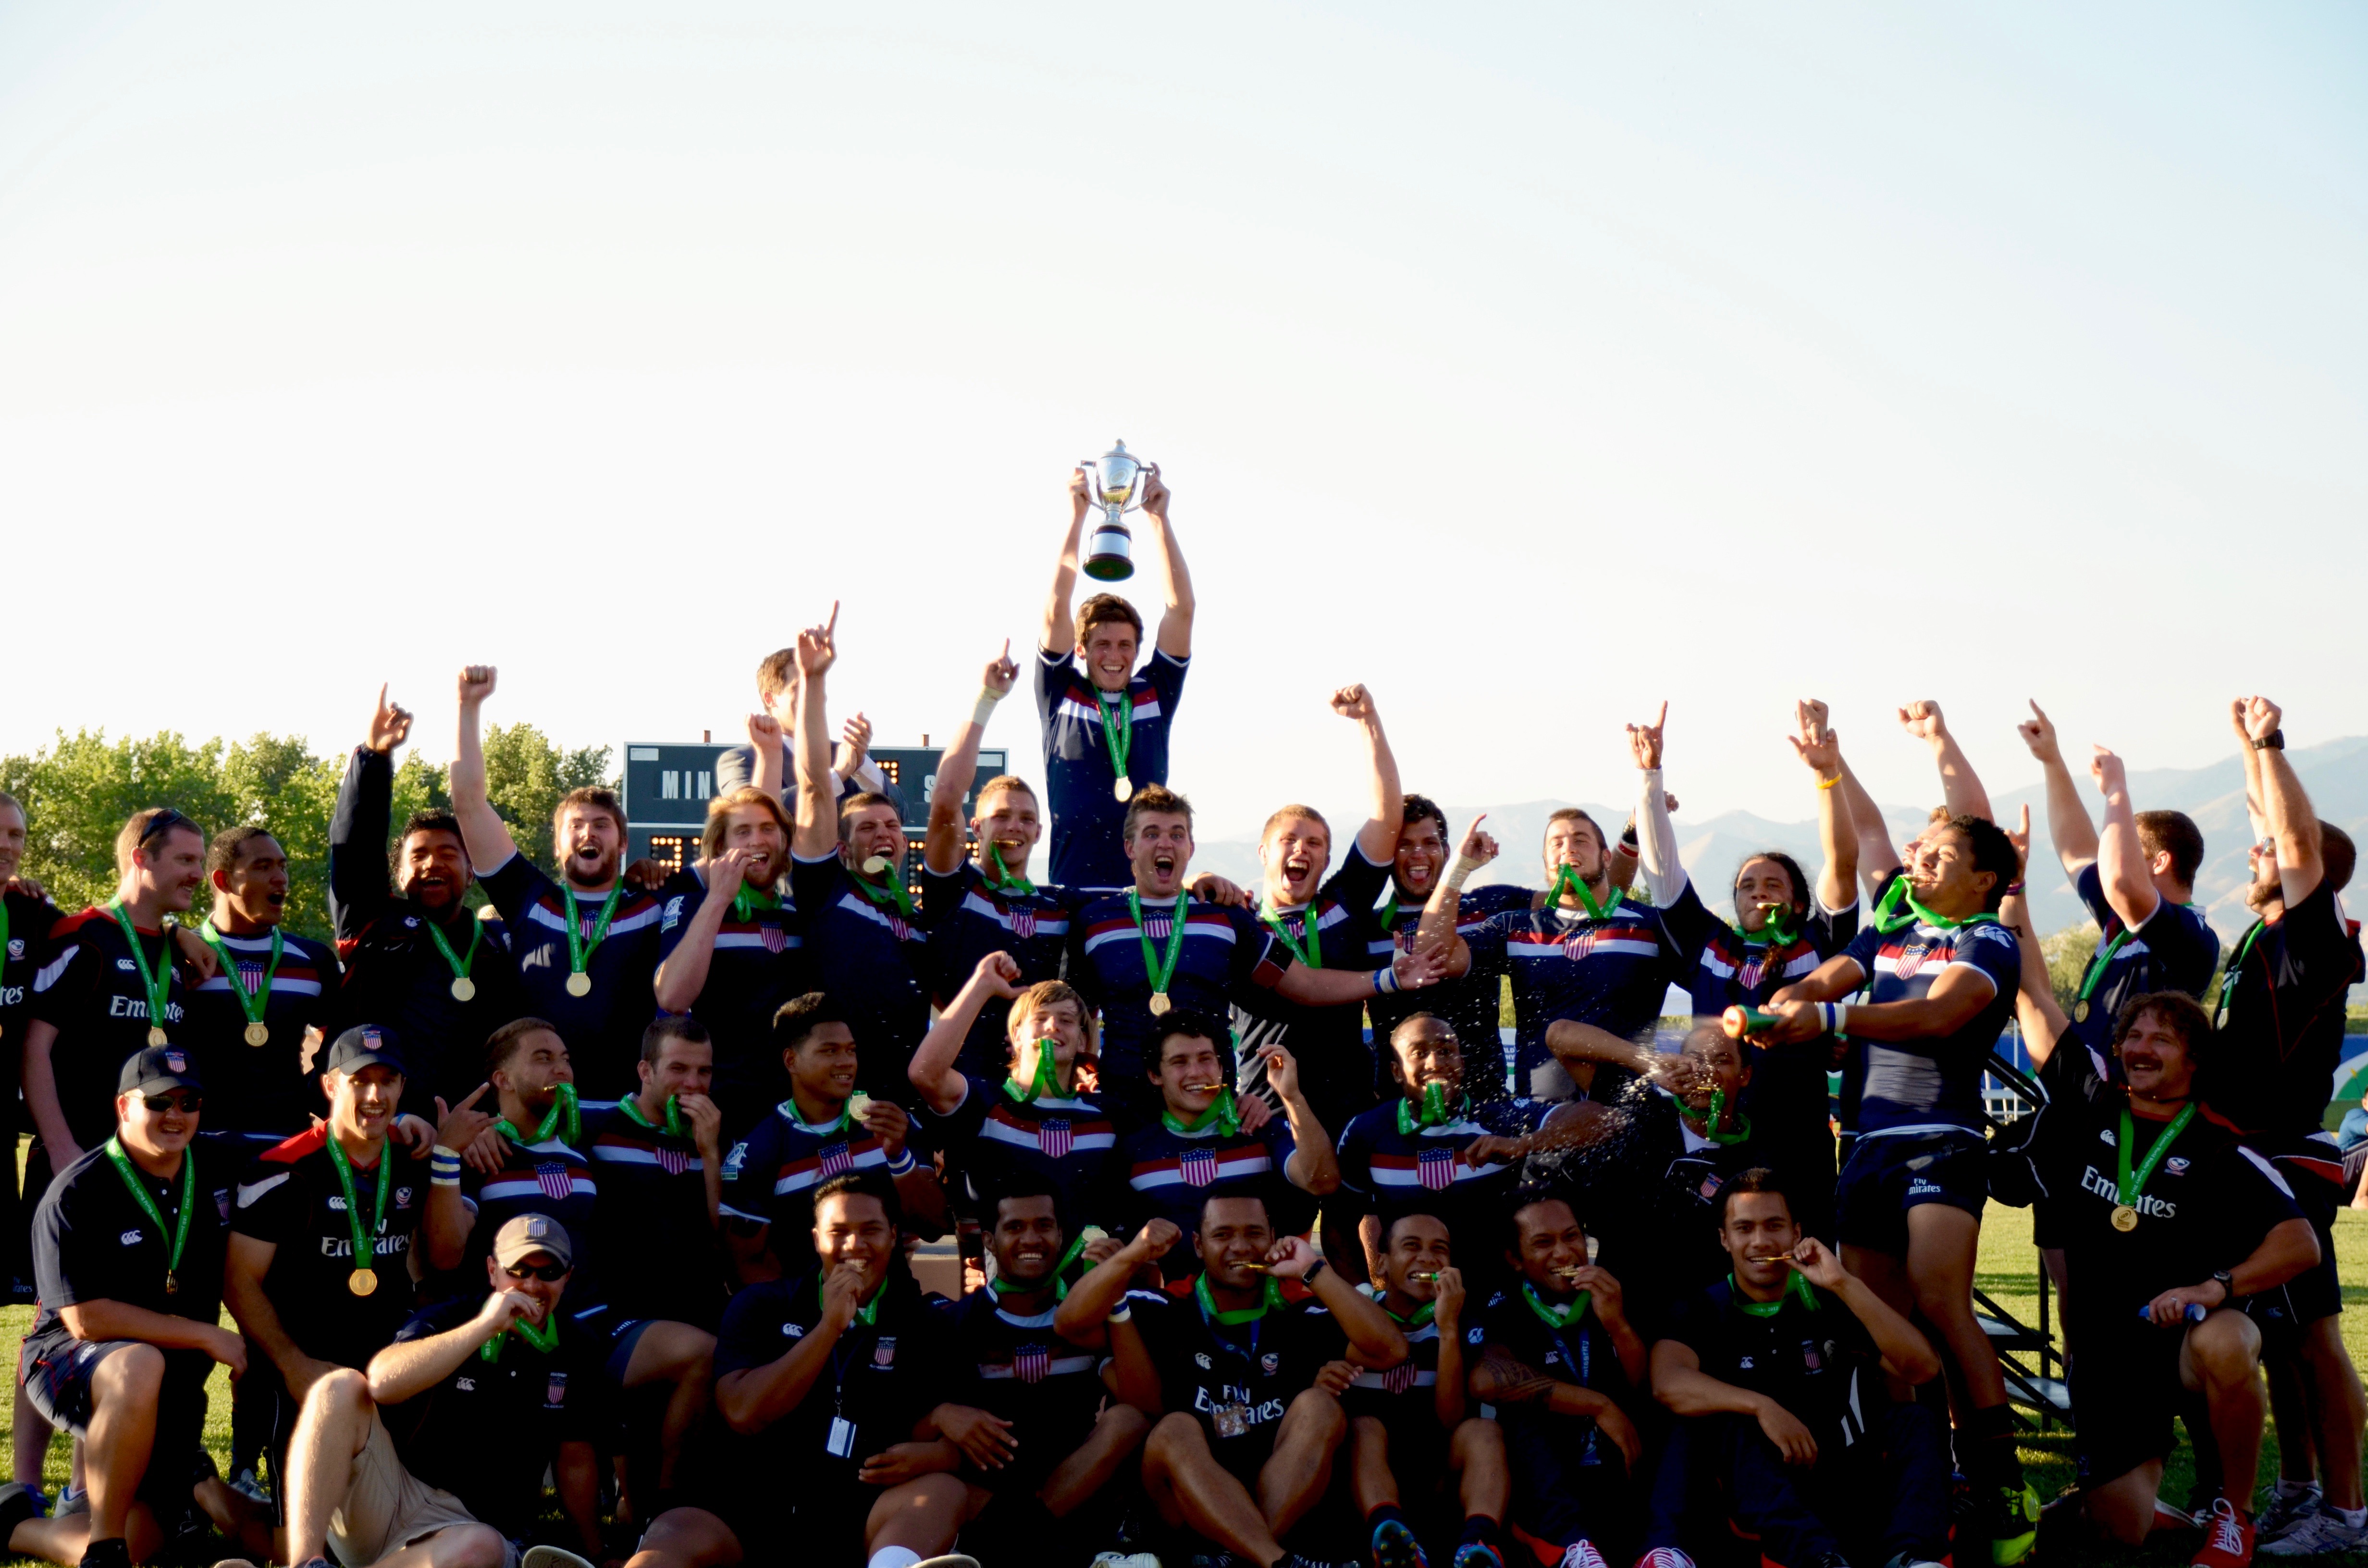 2012 USA U20 team wins the 2012 Junior World Rugby Trophy. P Crane photo.